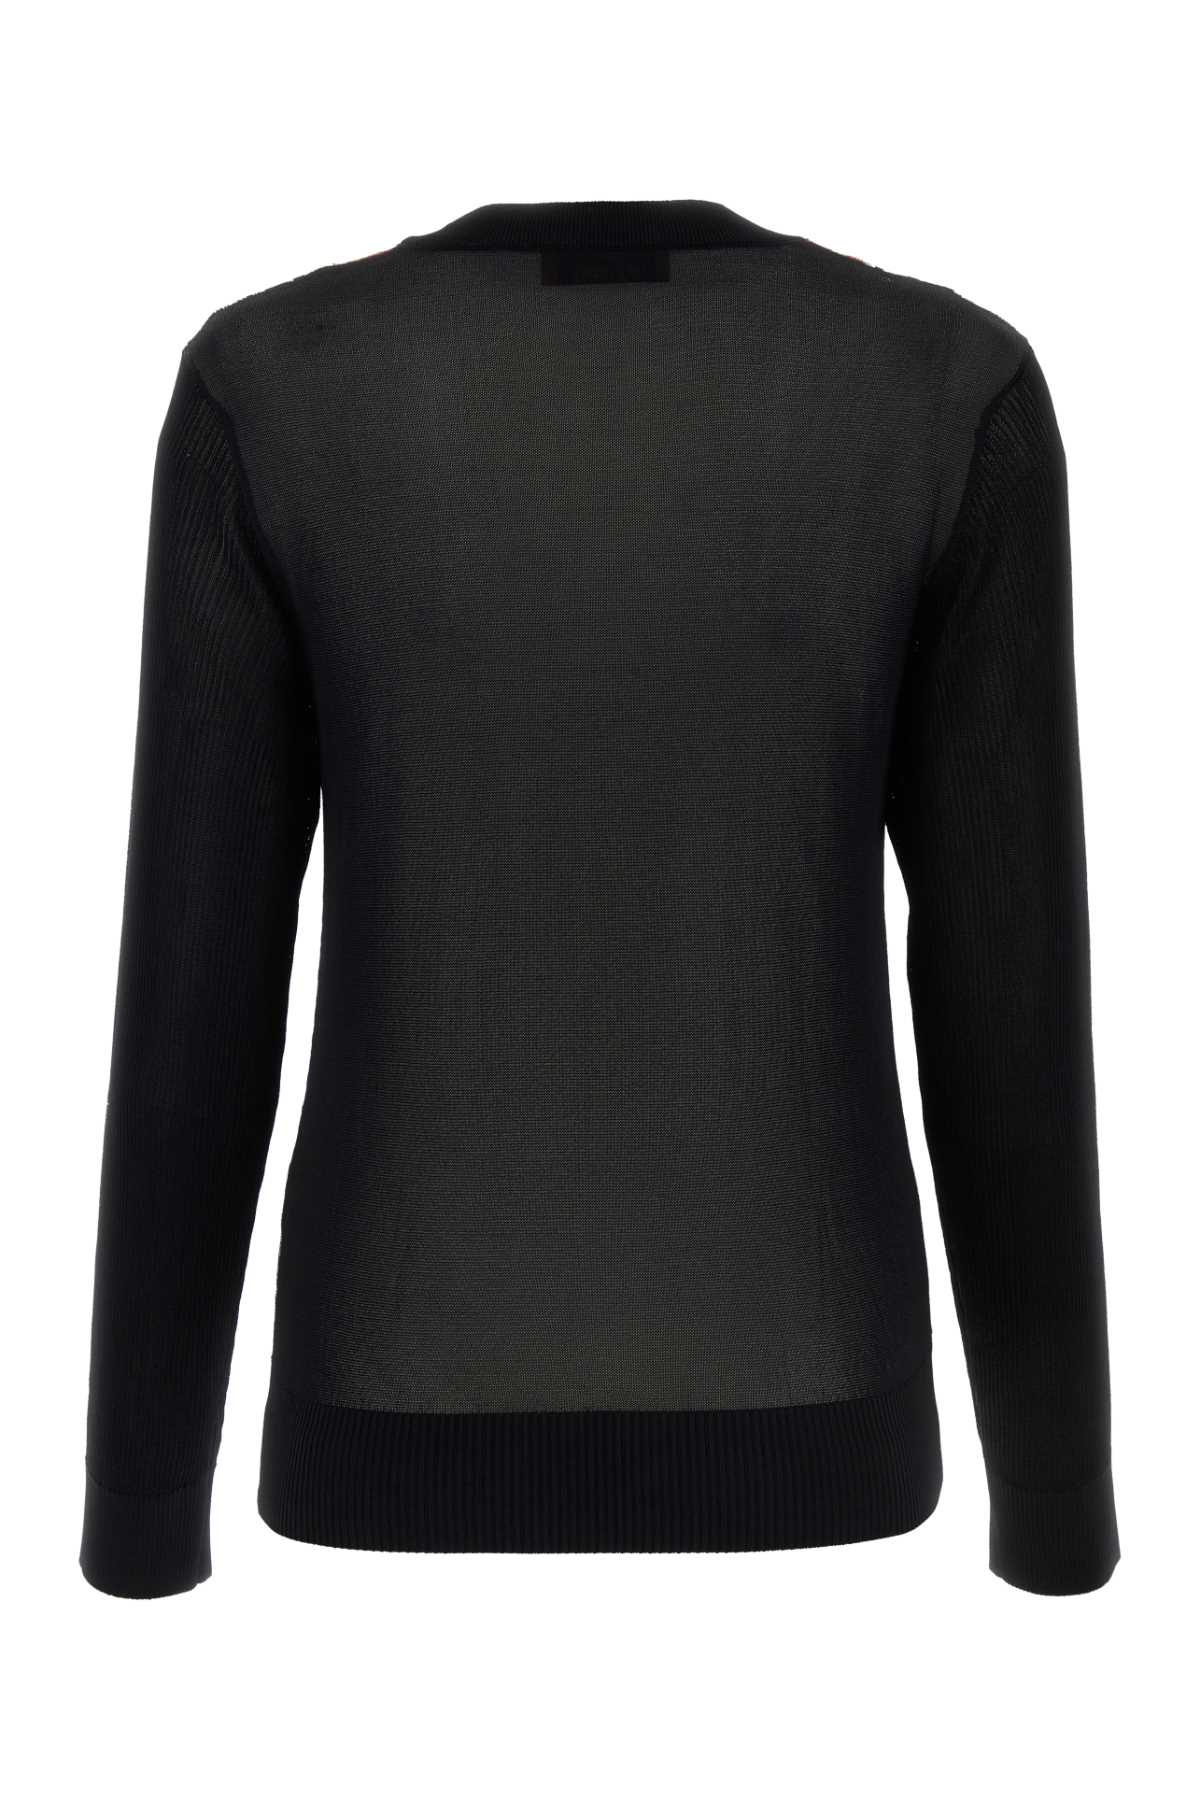 Missoni Black Viscose Sweater In Blackbeauty